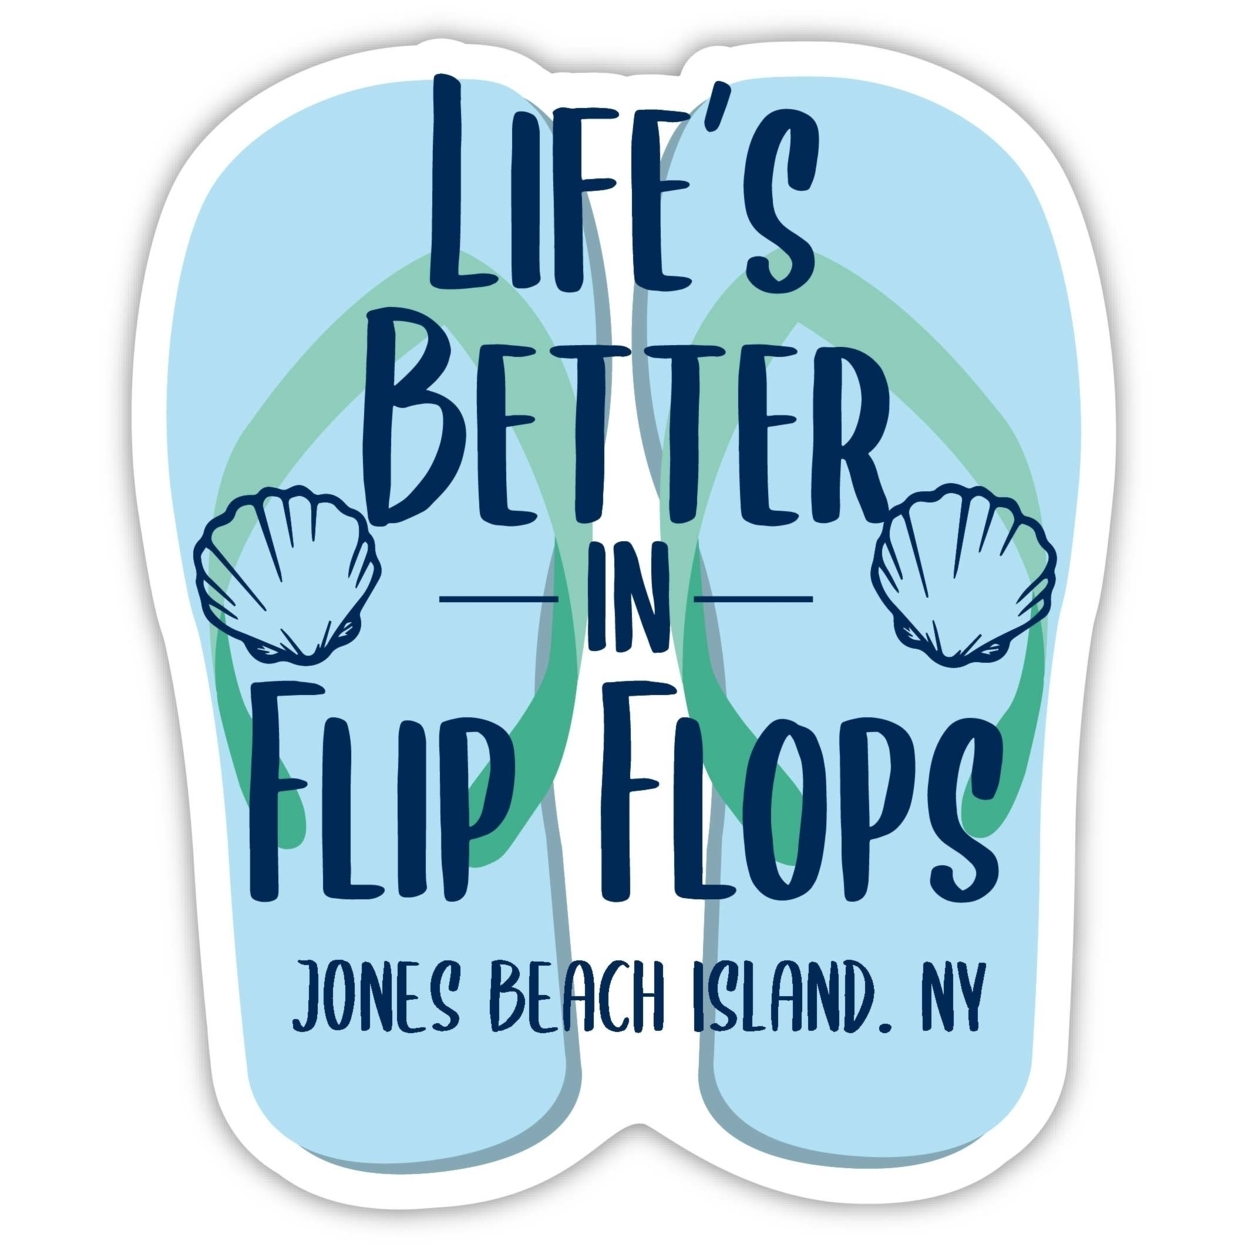 Jones Beach Island New York Souvenir 4 Inch Vinyl Decal Sticker Flip Flop Design